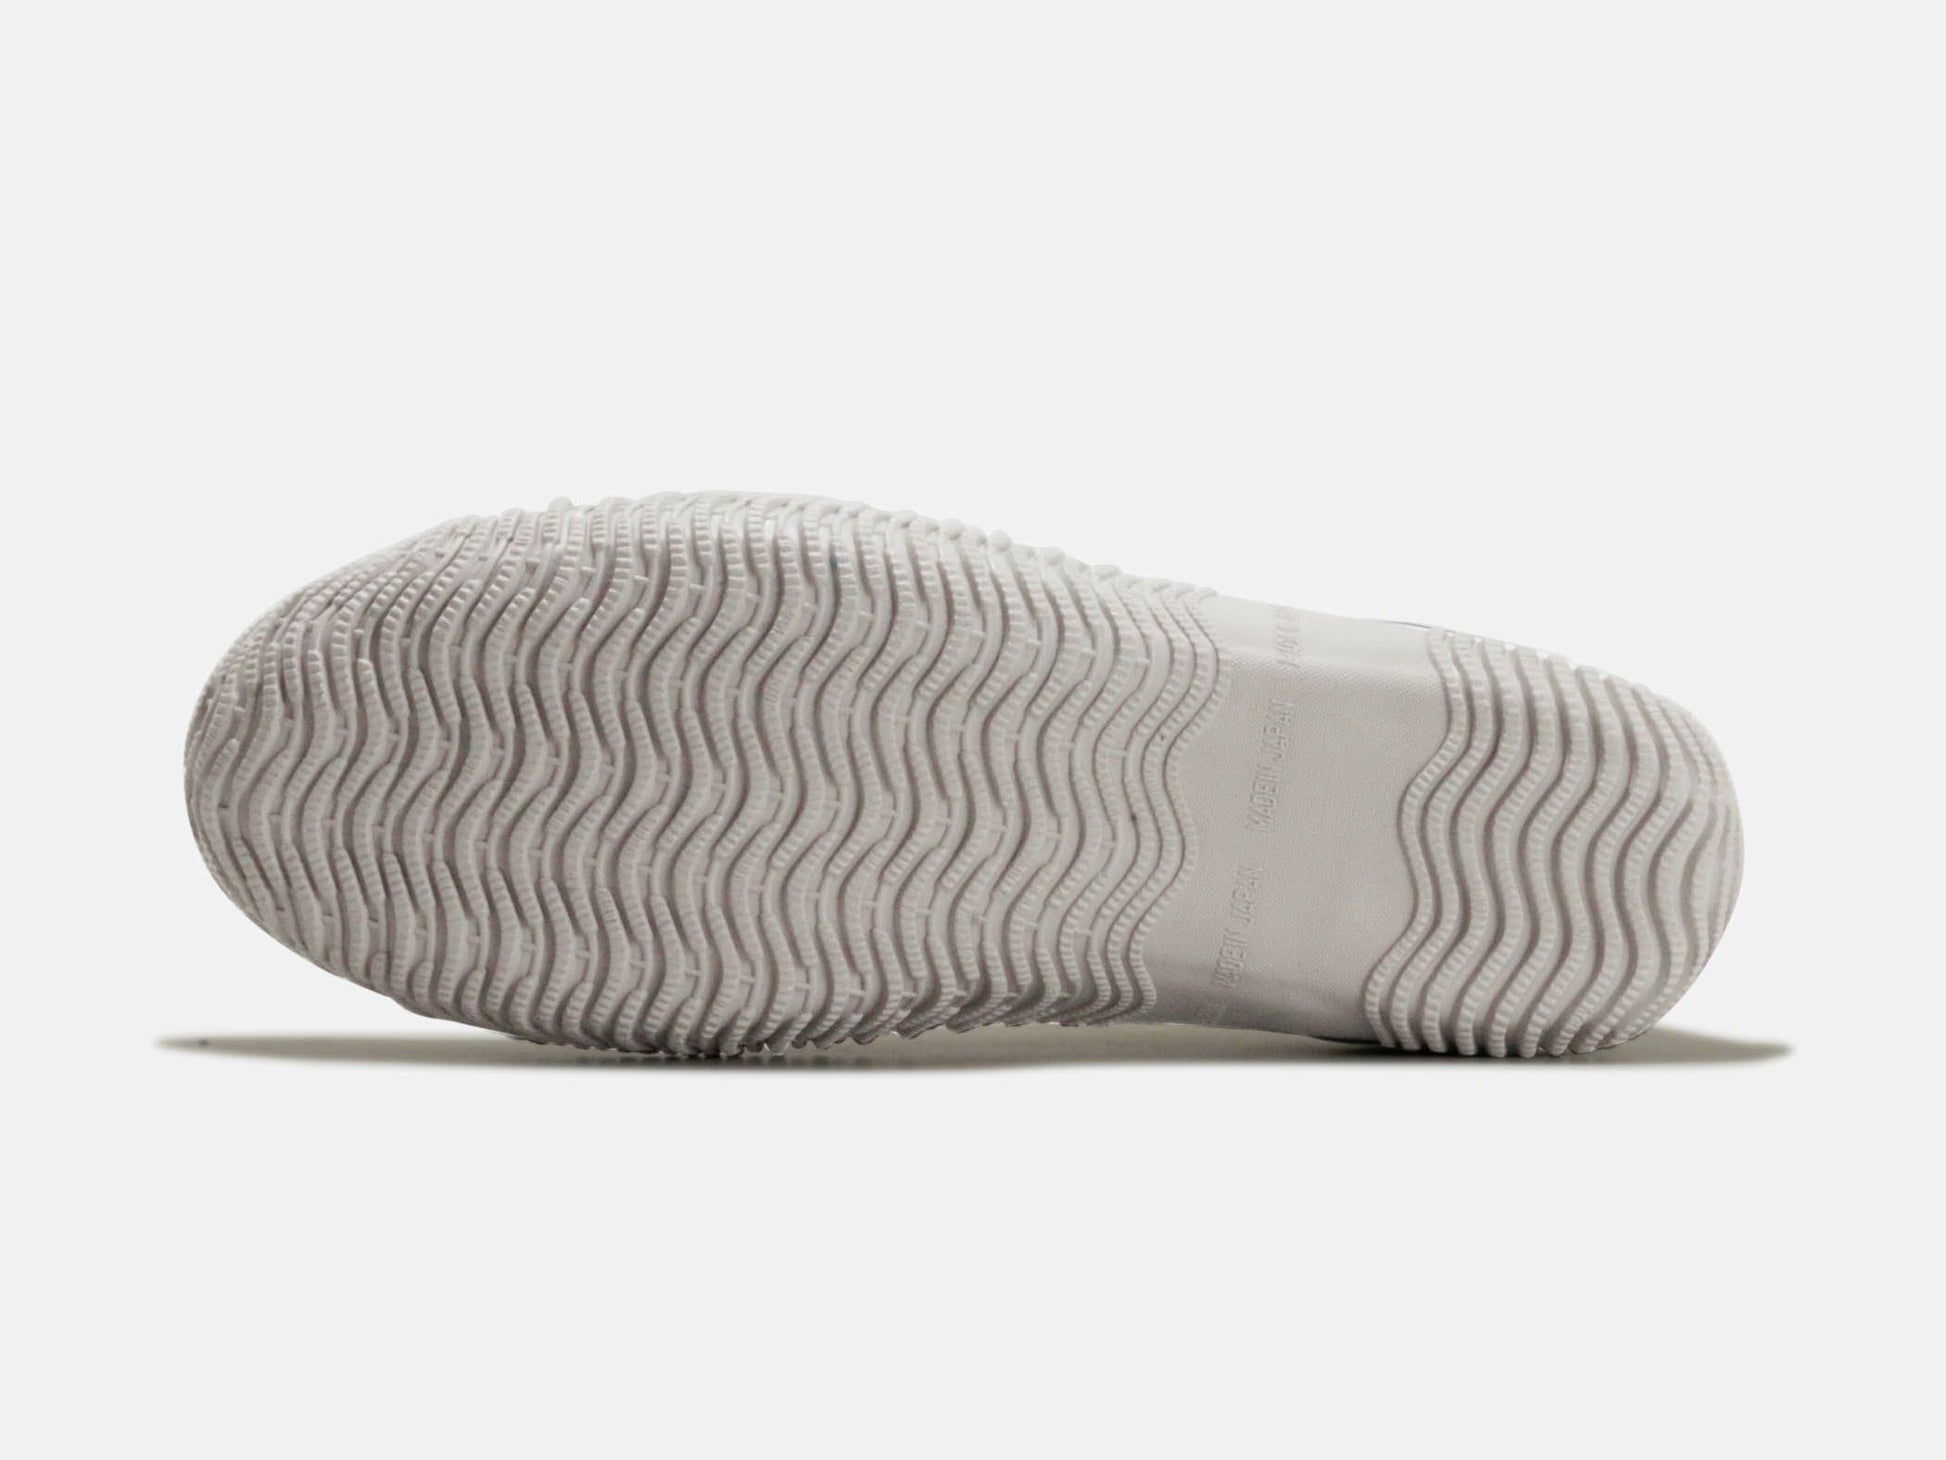 SPINGLE MOVEのスニーカー「SPM-141 Light Gray」の靴底の商品画像